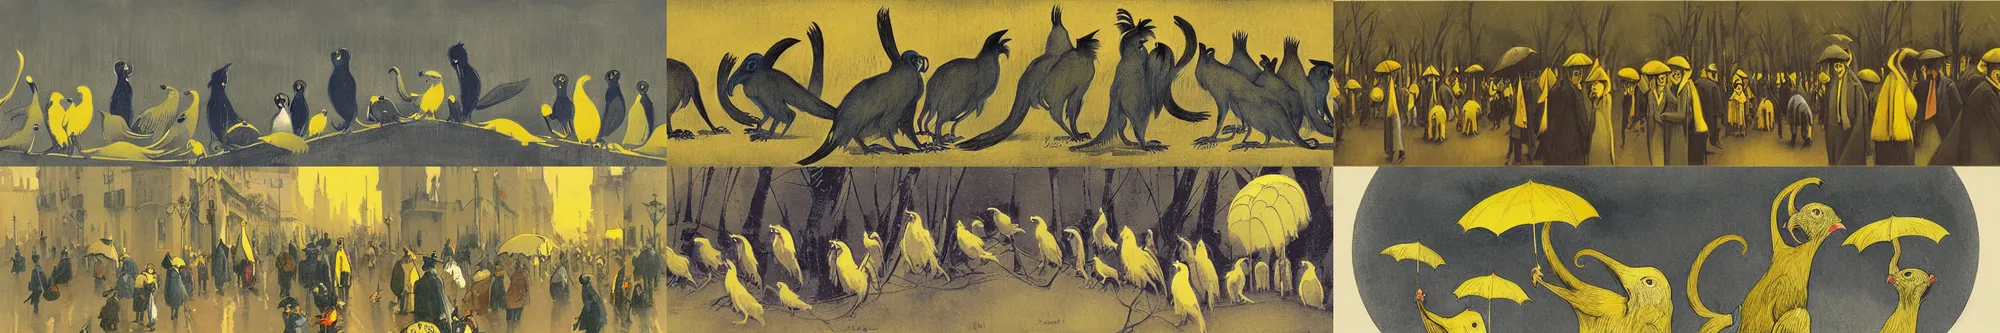 Prompt: bustling crowd scene of long - eared crow - monkey creatures wearing raincoats | payne's grey, azo yellow, and indigo | tonalist style, art nouveau illustration